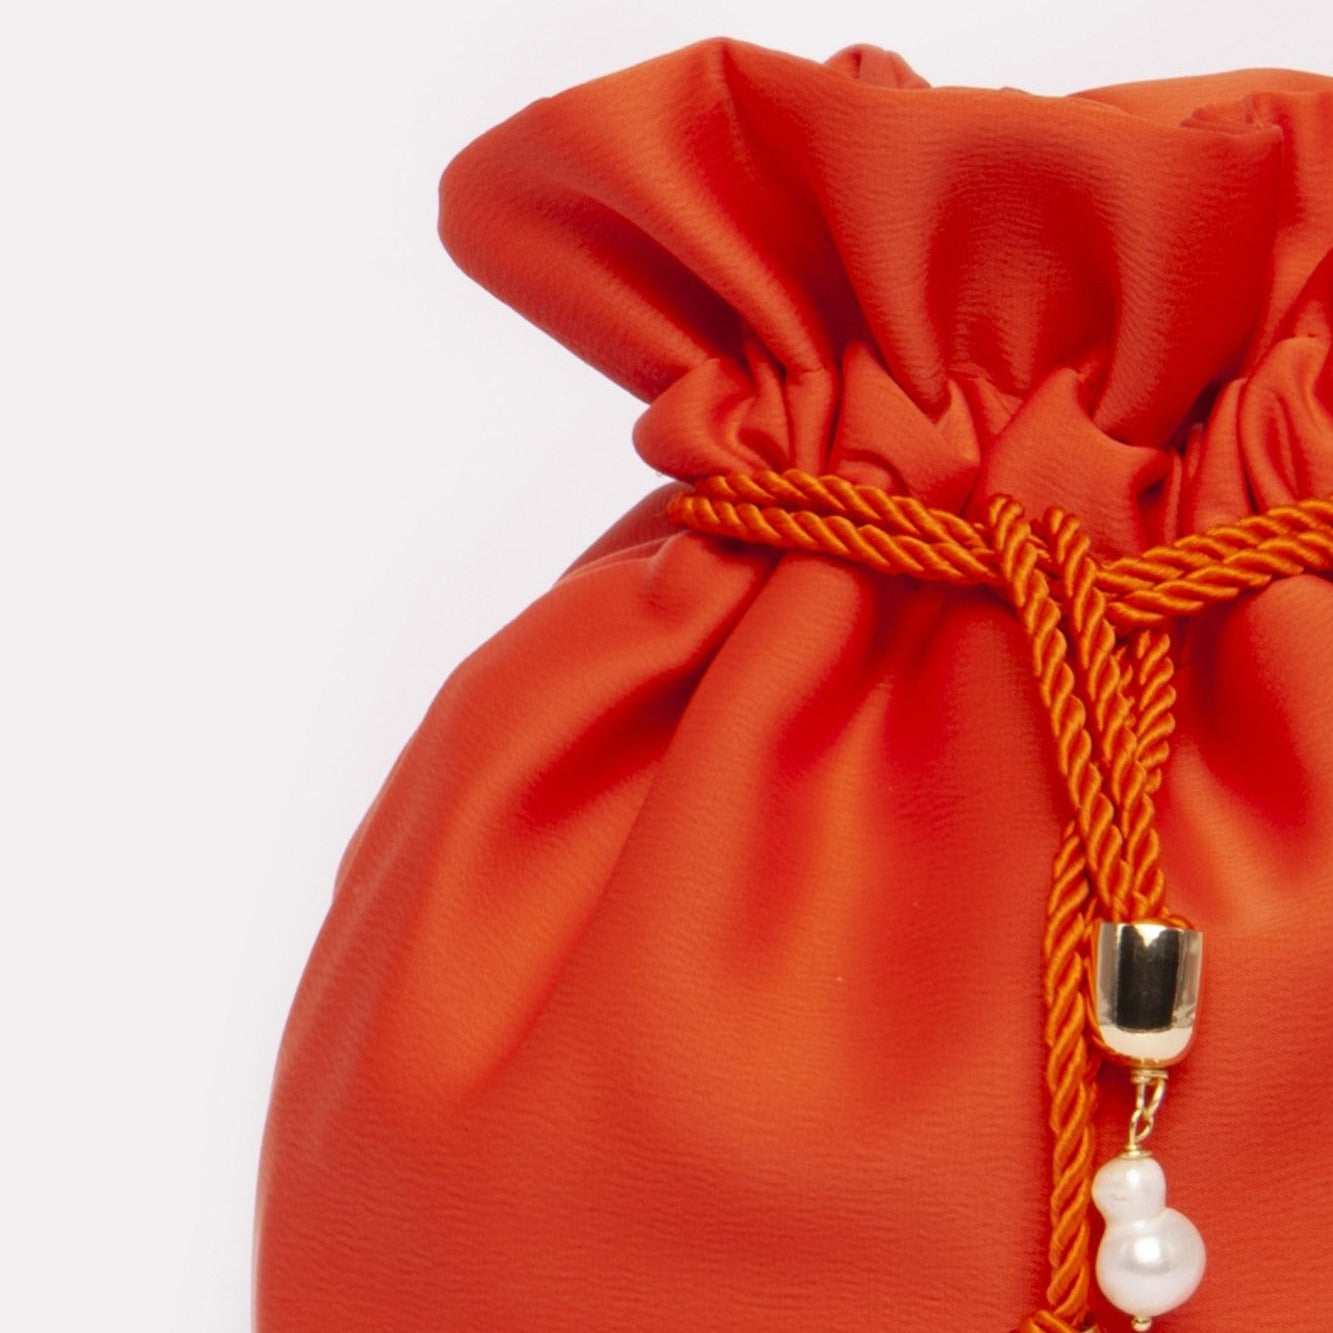 Giulia flat bag in colorazione arancione